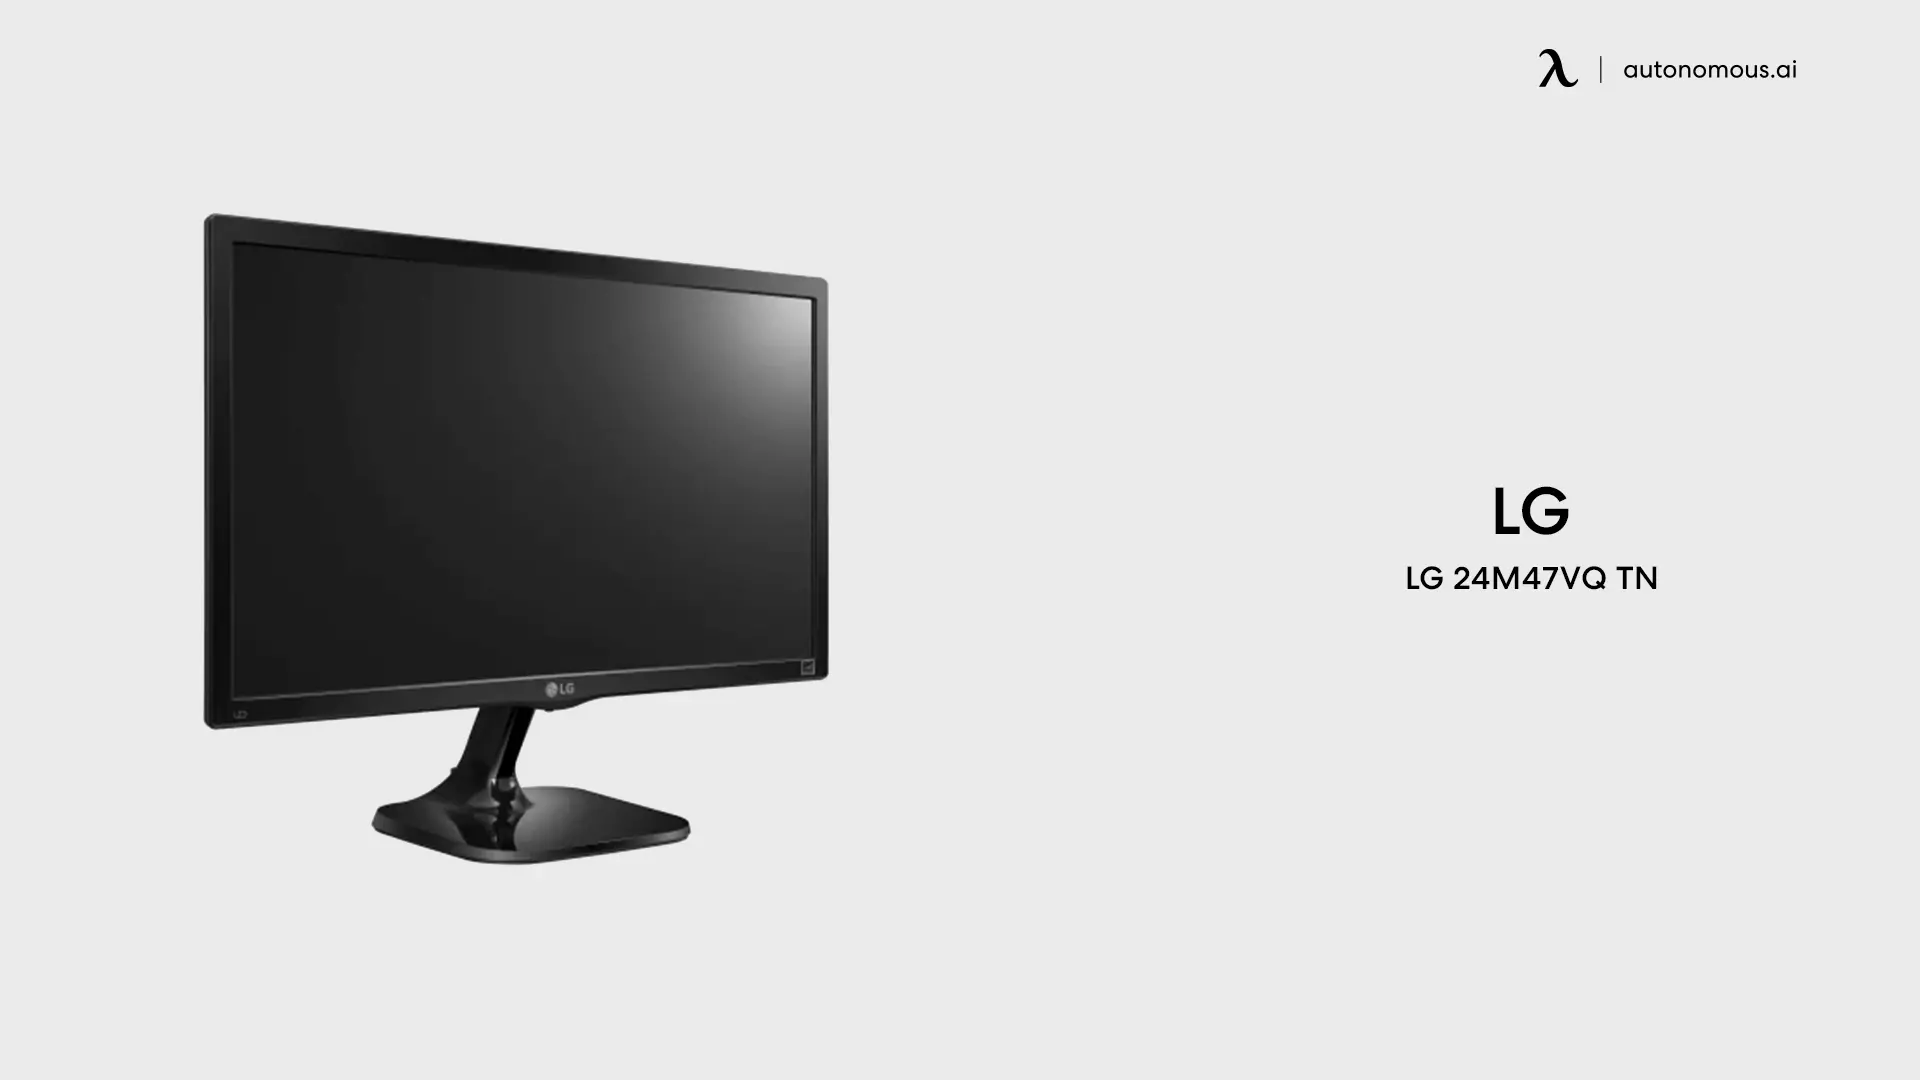 LG 24M47VQ TN 24 inch monitor